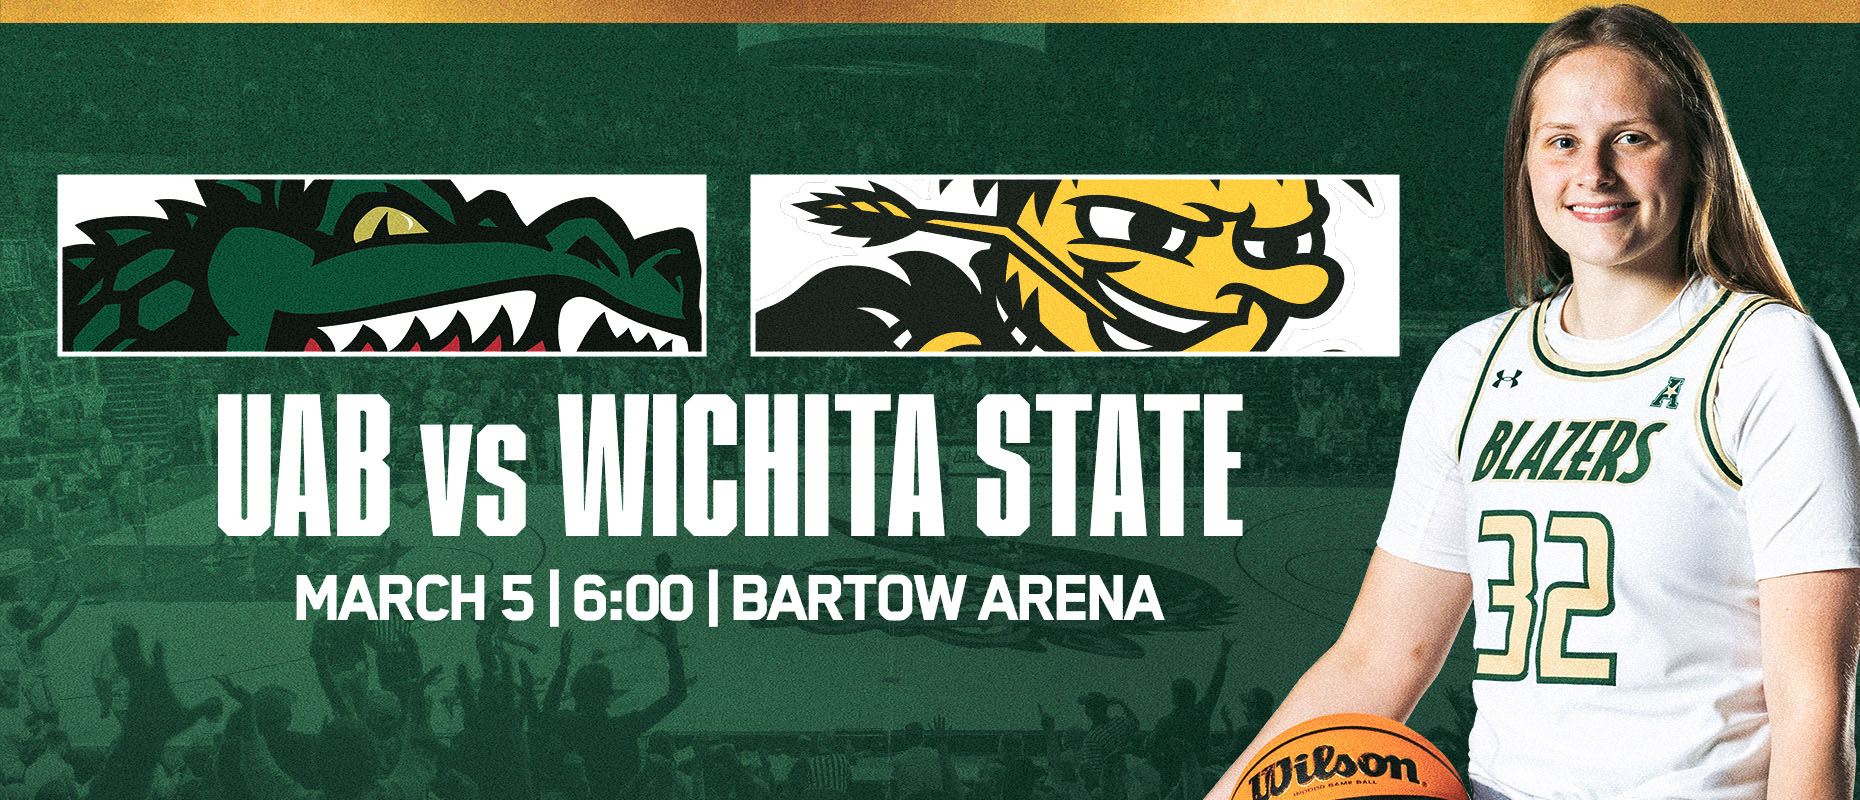 UAB Women's Basketball: Blazers vs Wichita State. March 5, 6:00pm at Bartow Arena.